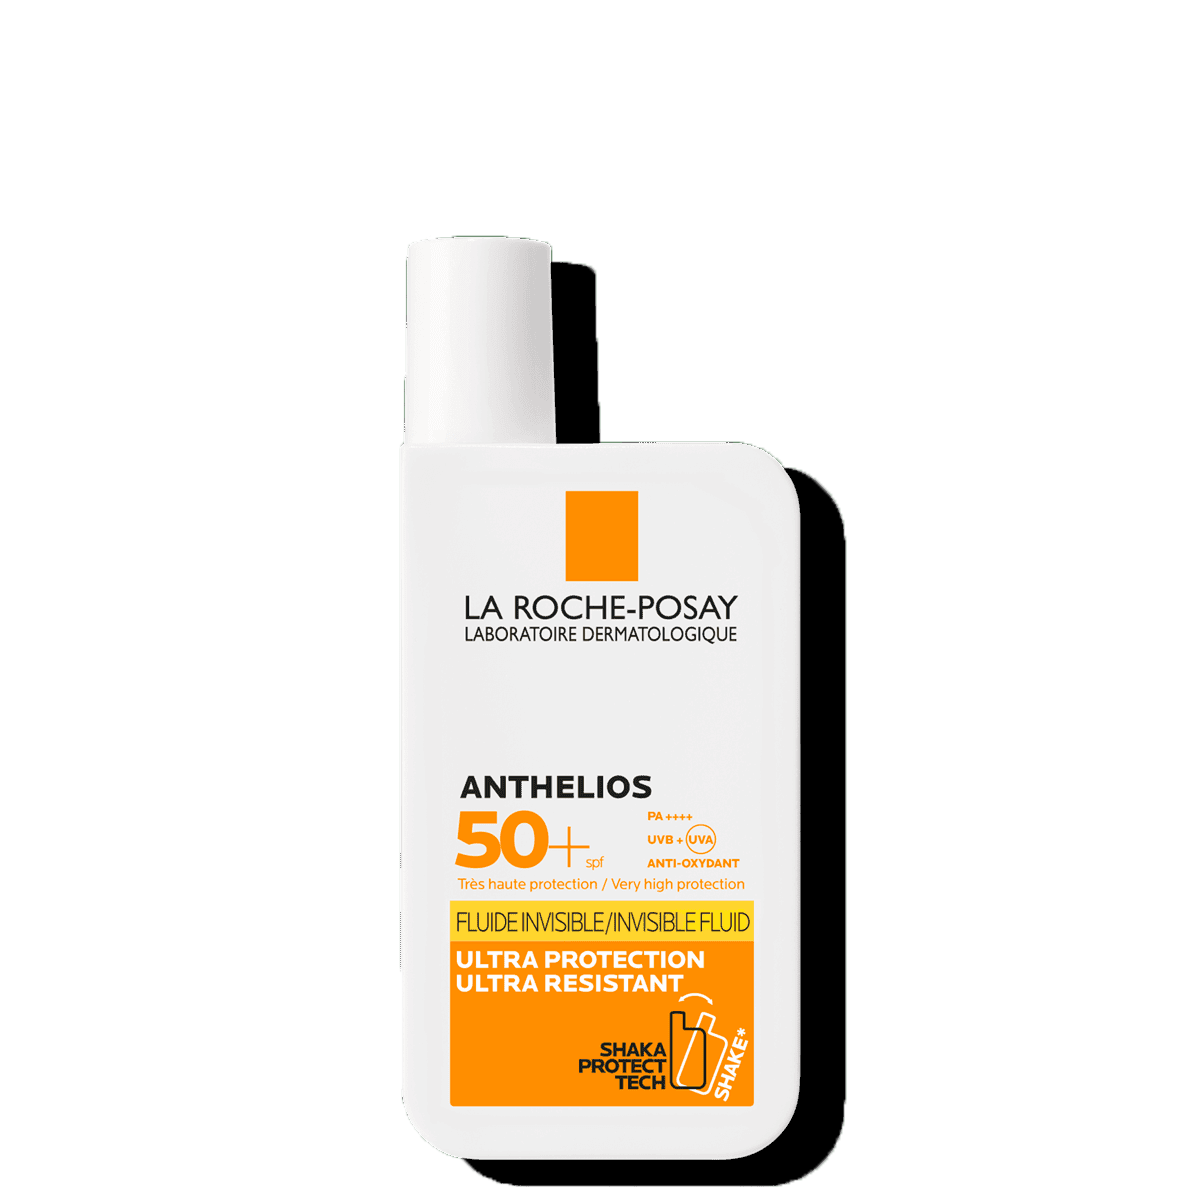 La Roche Posay ProductPage Sun Anthelios Shaka Fluid Spf50 50ml Fragrance Free